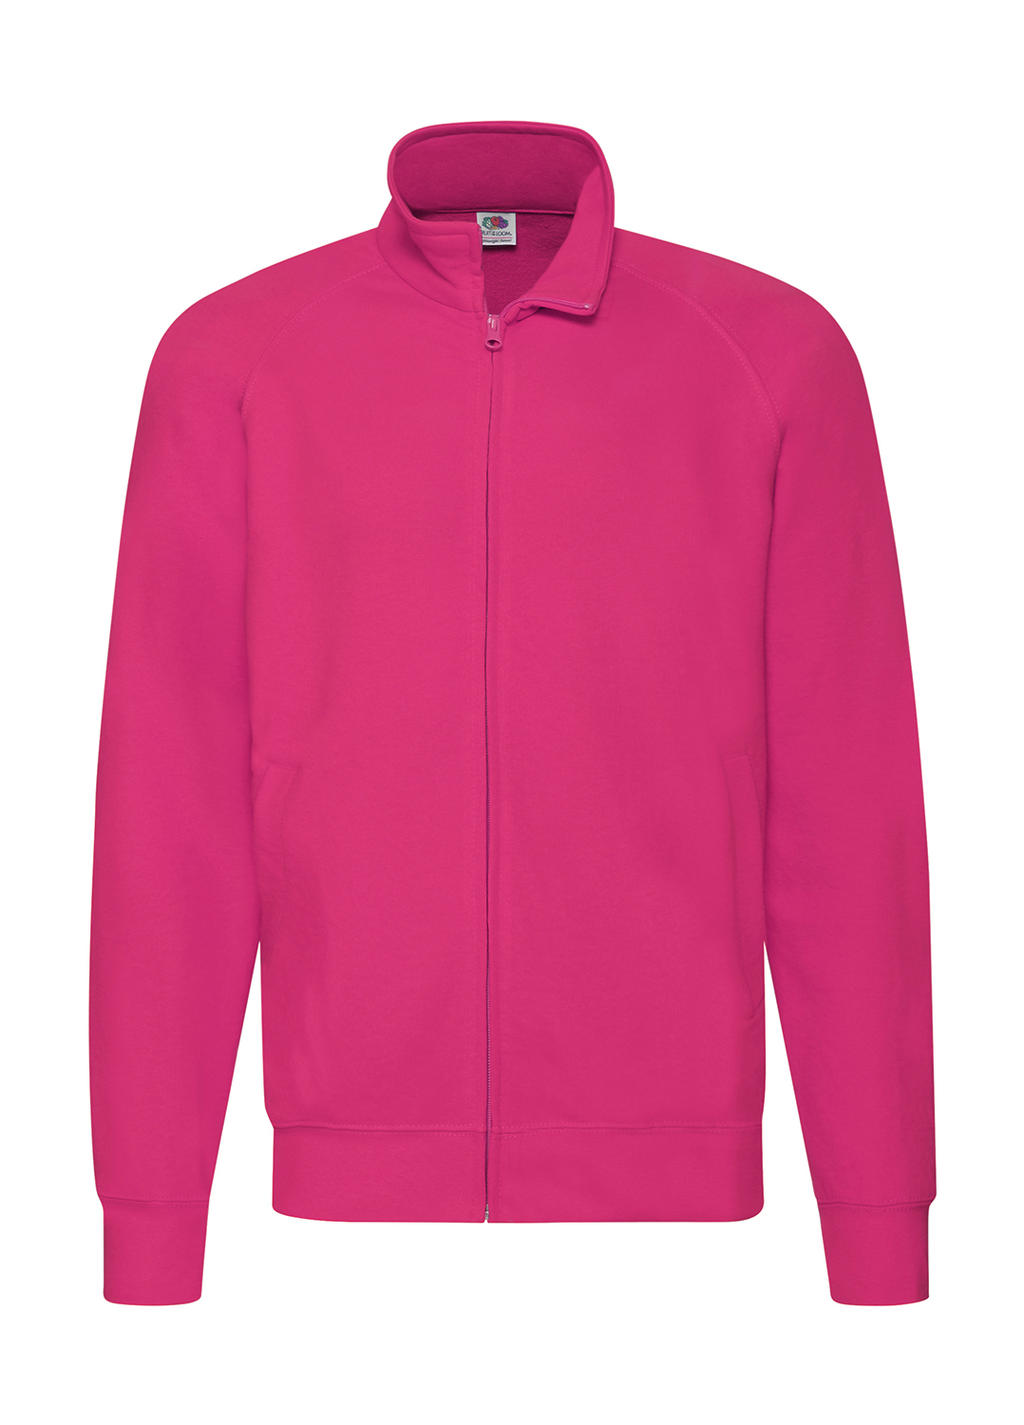  Lightweight Sweat Jacket in Farbe Fuchsia